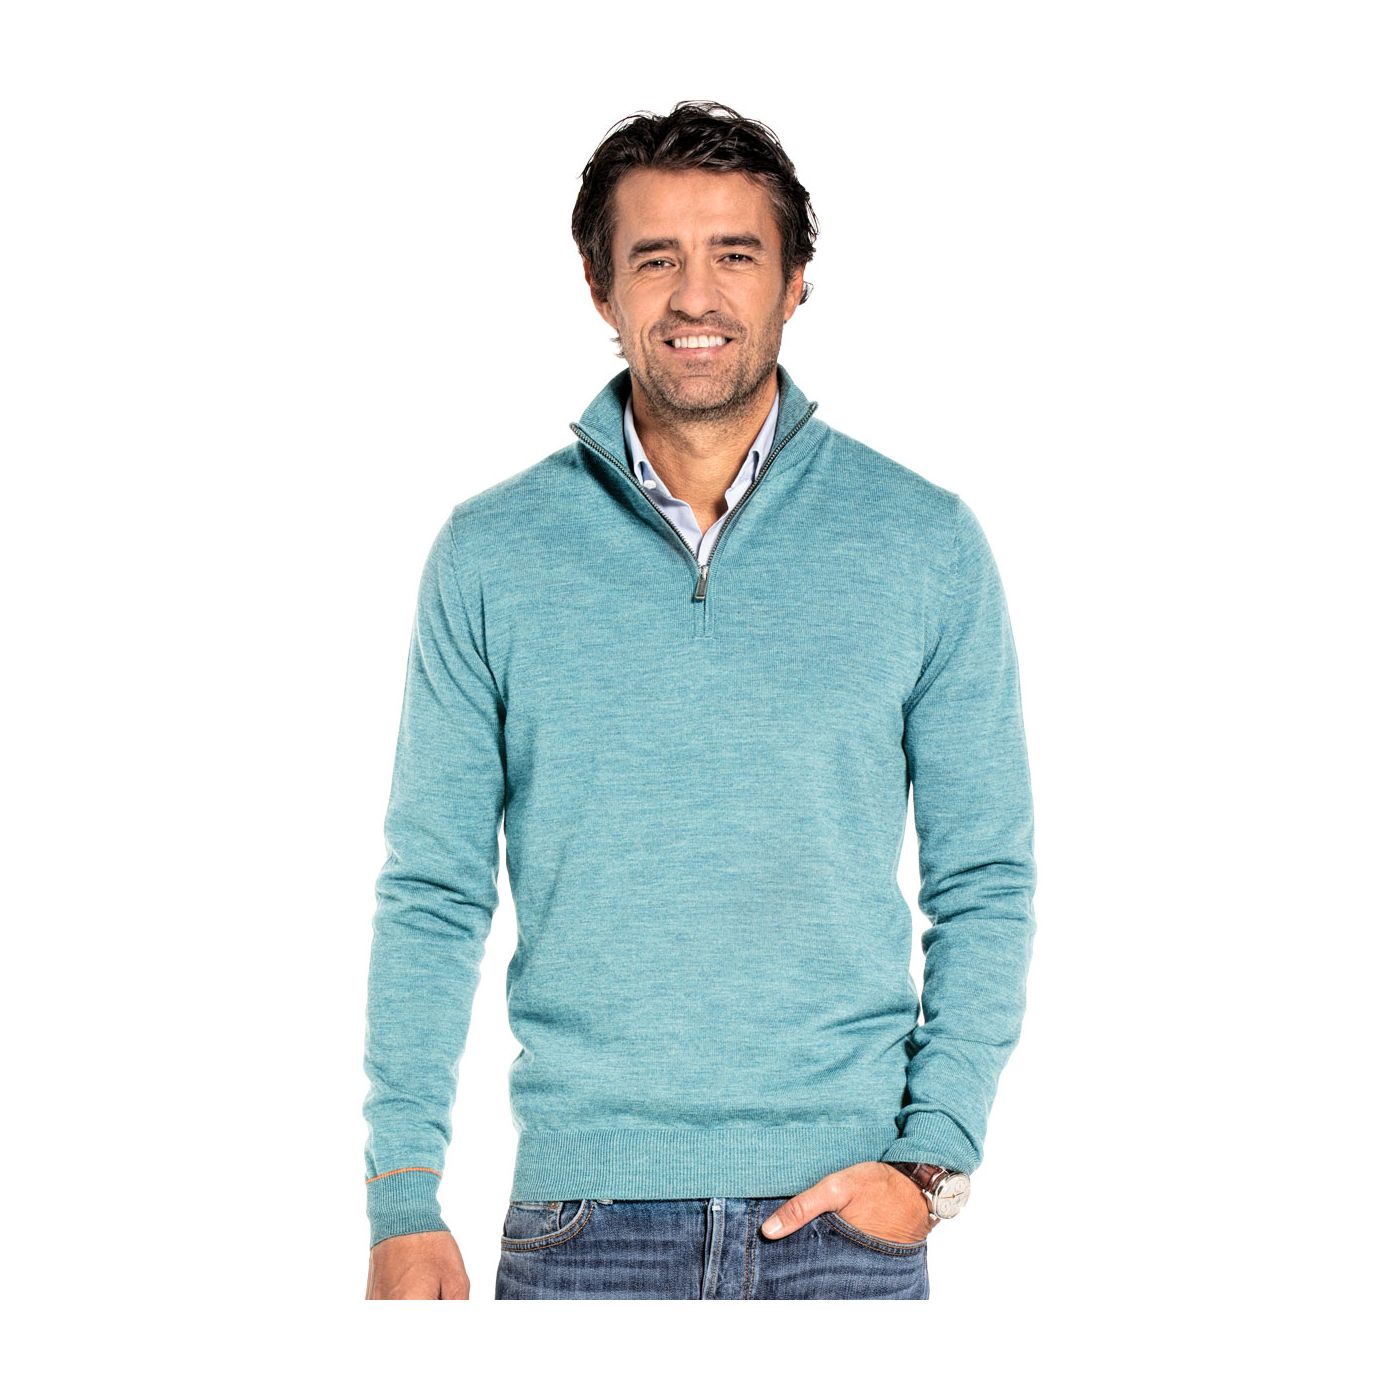 Half zip sweater for men made of Merino wool in Light blue